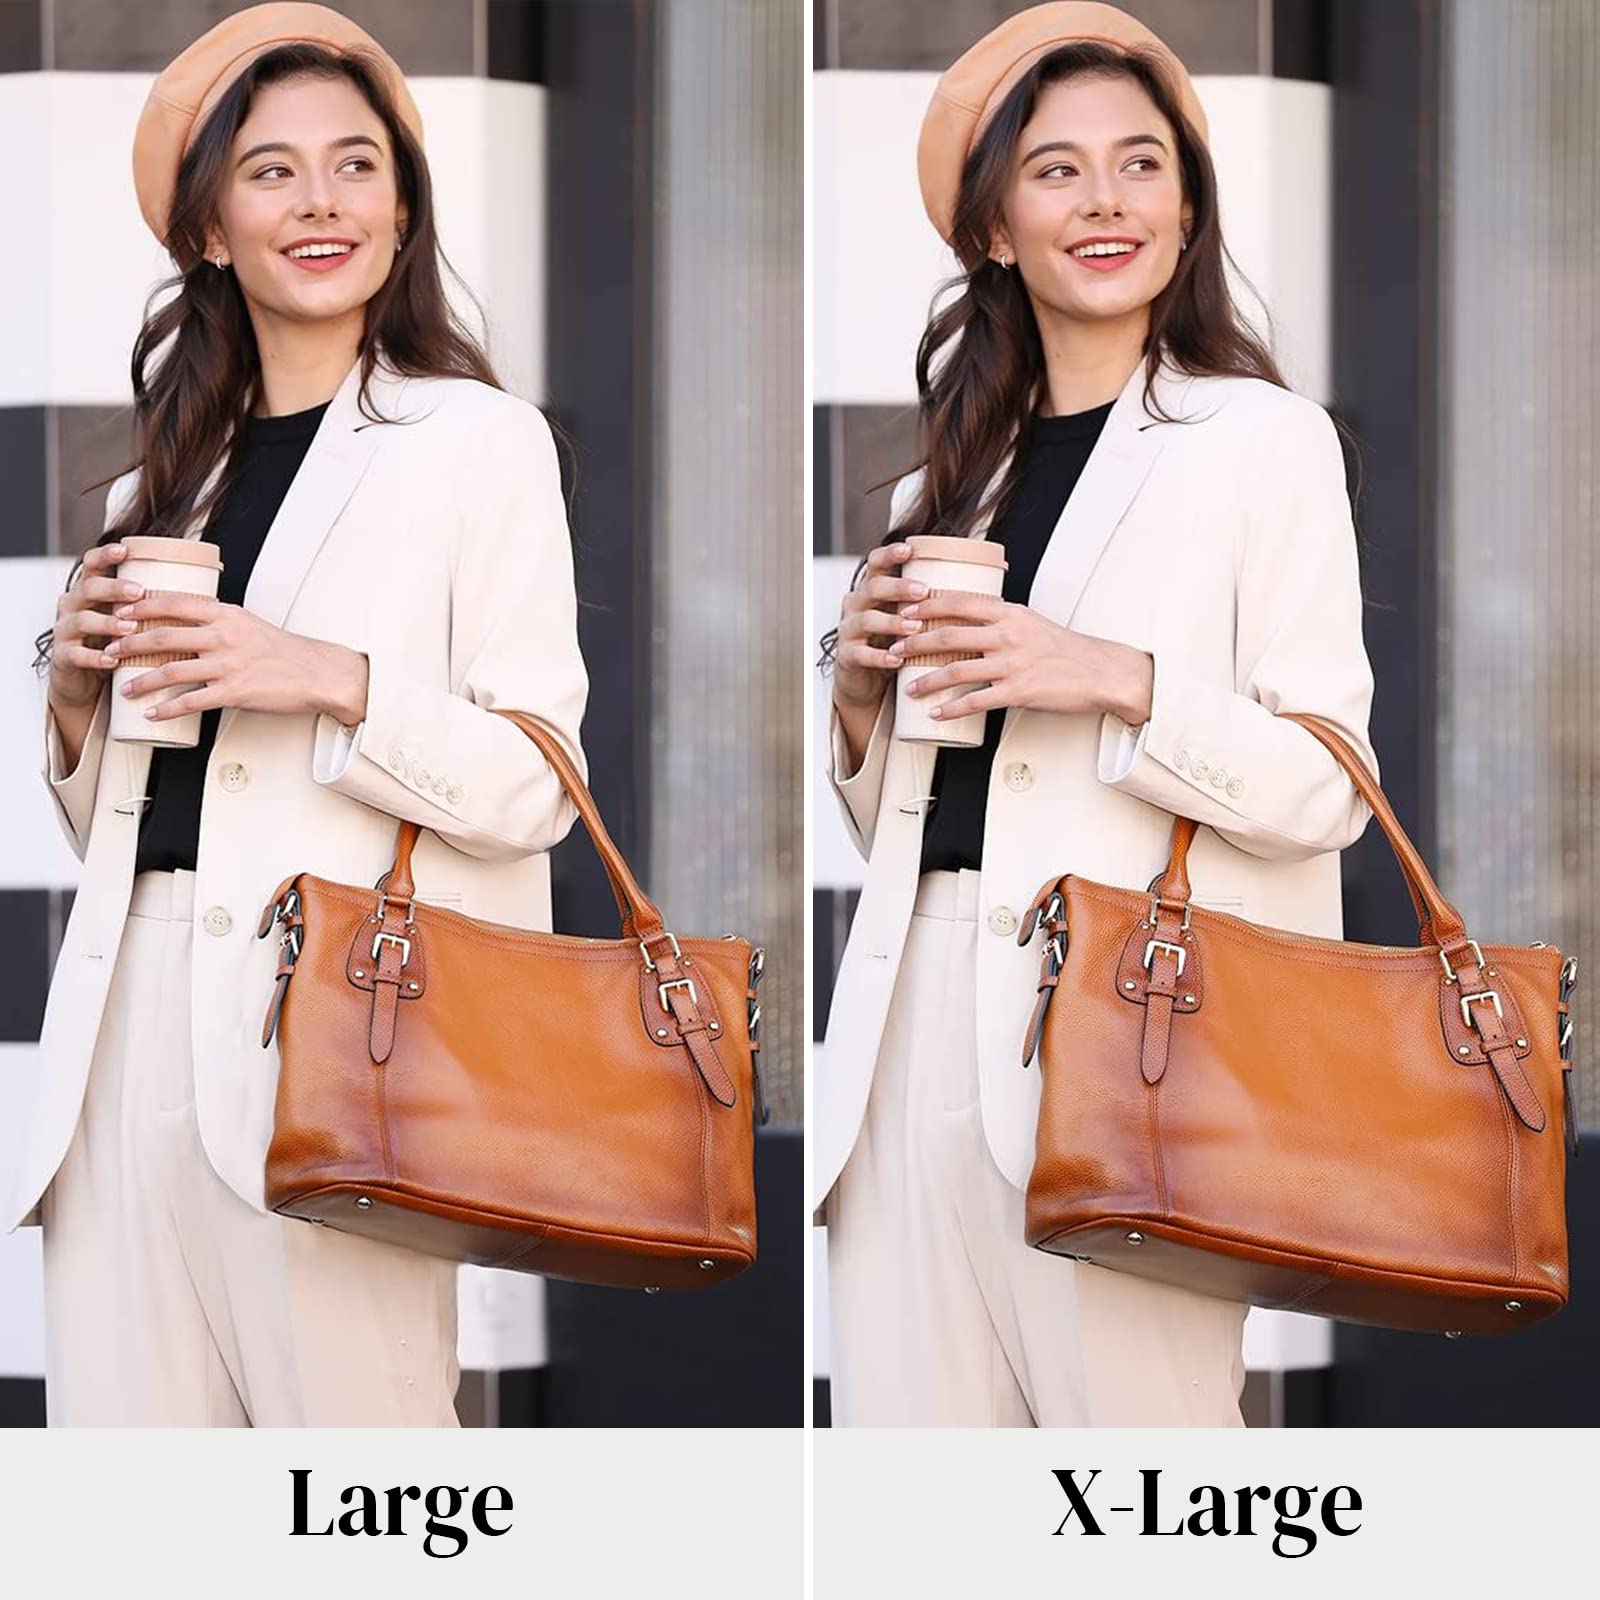 Kattee Genuine Leather Handbags Tote Shoulder Bag for Woman Satchel Designer Purse Top Handles Crossbody Bag Large Capacity